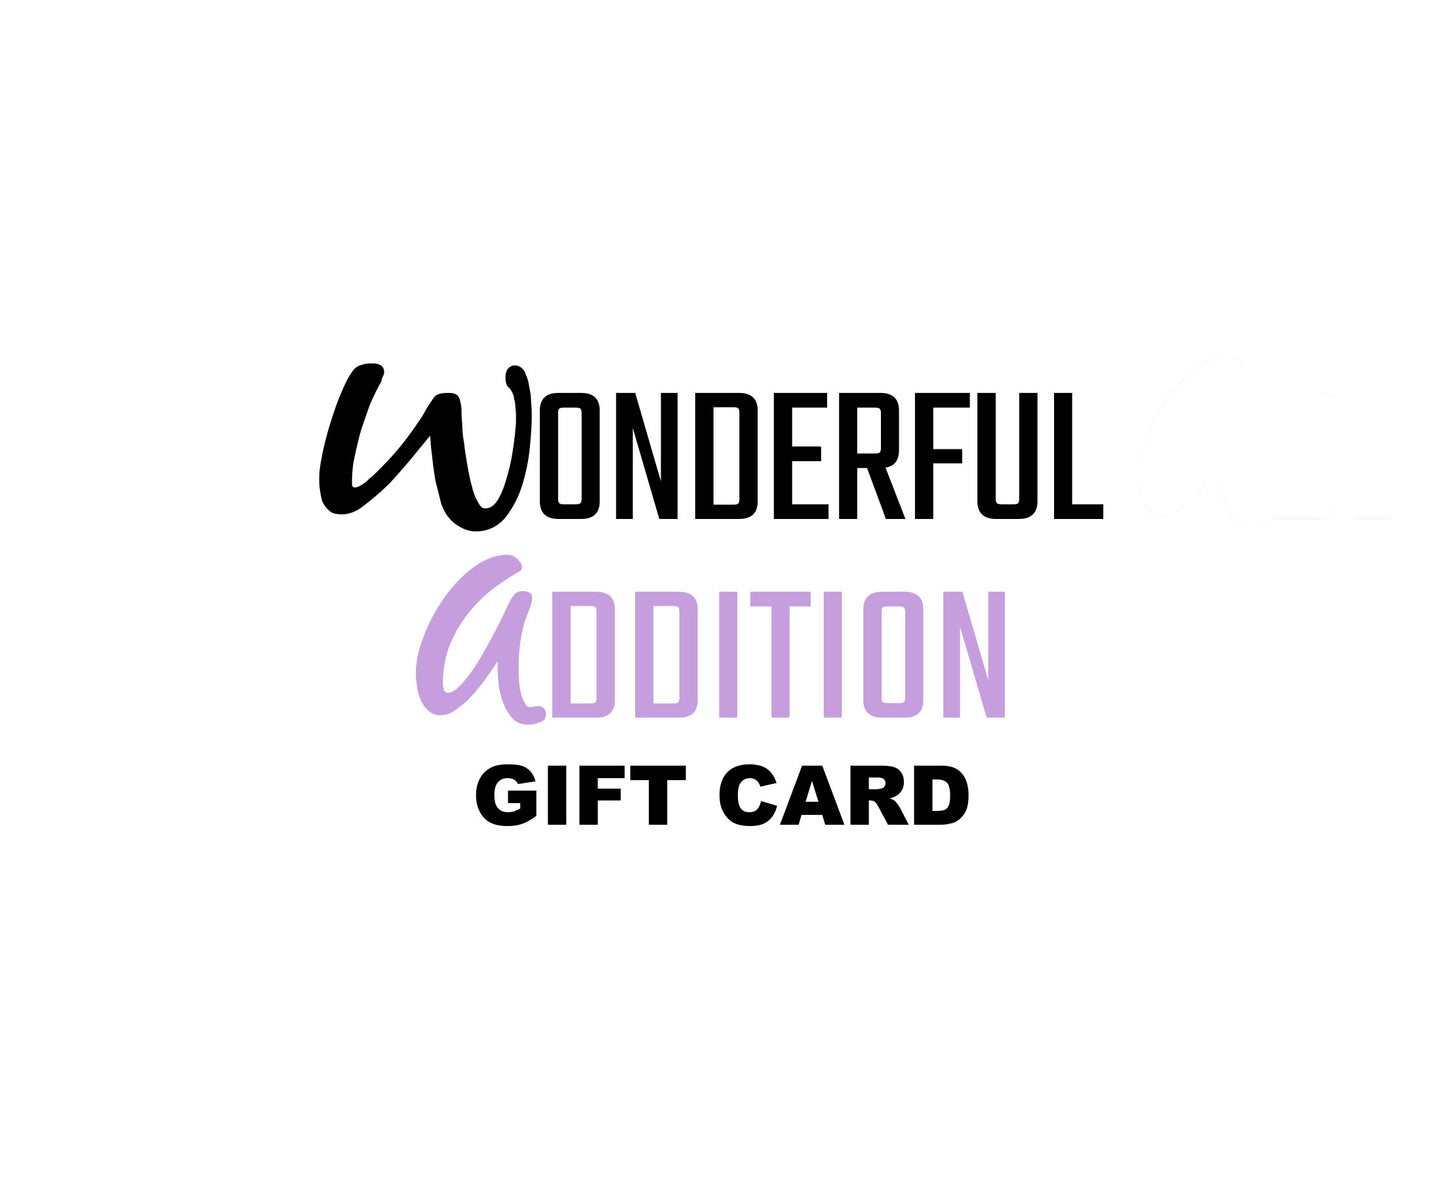 Gift Cards - $10.00 - Wonderful Addition